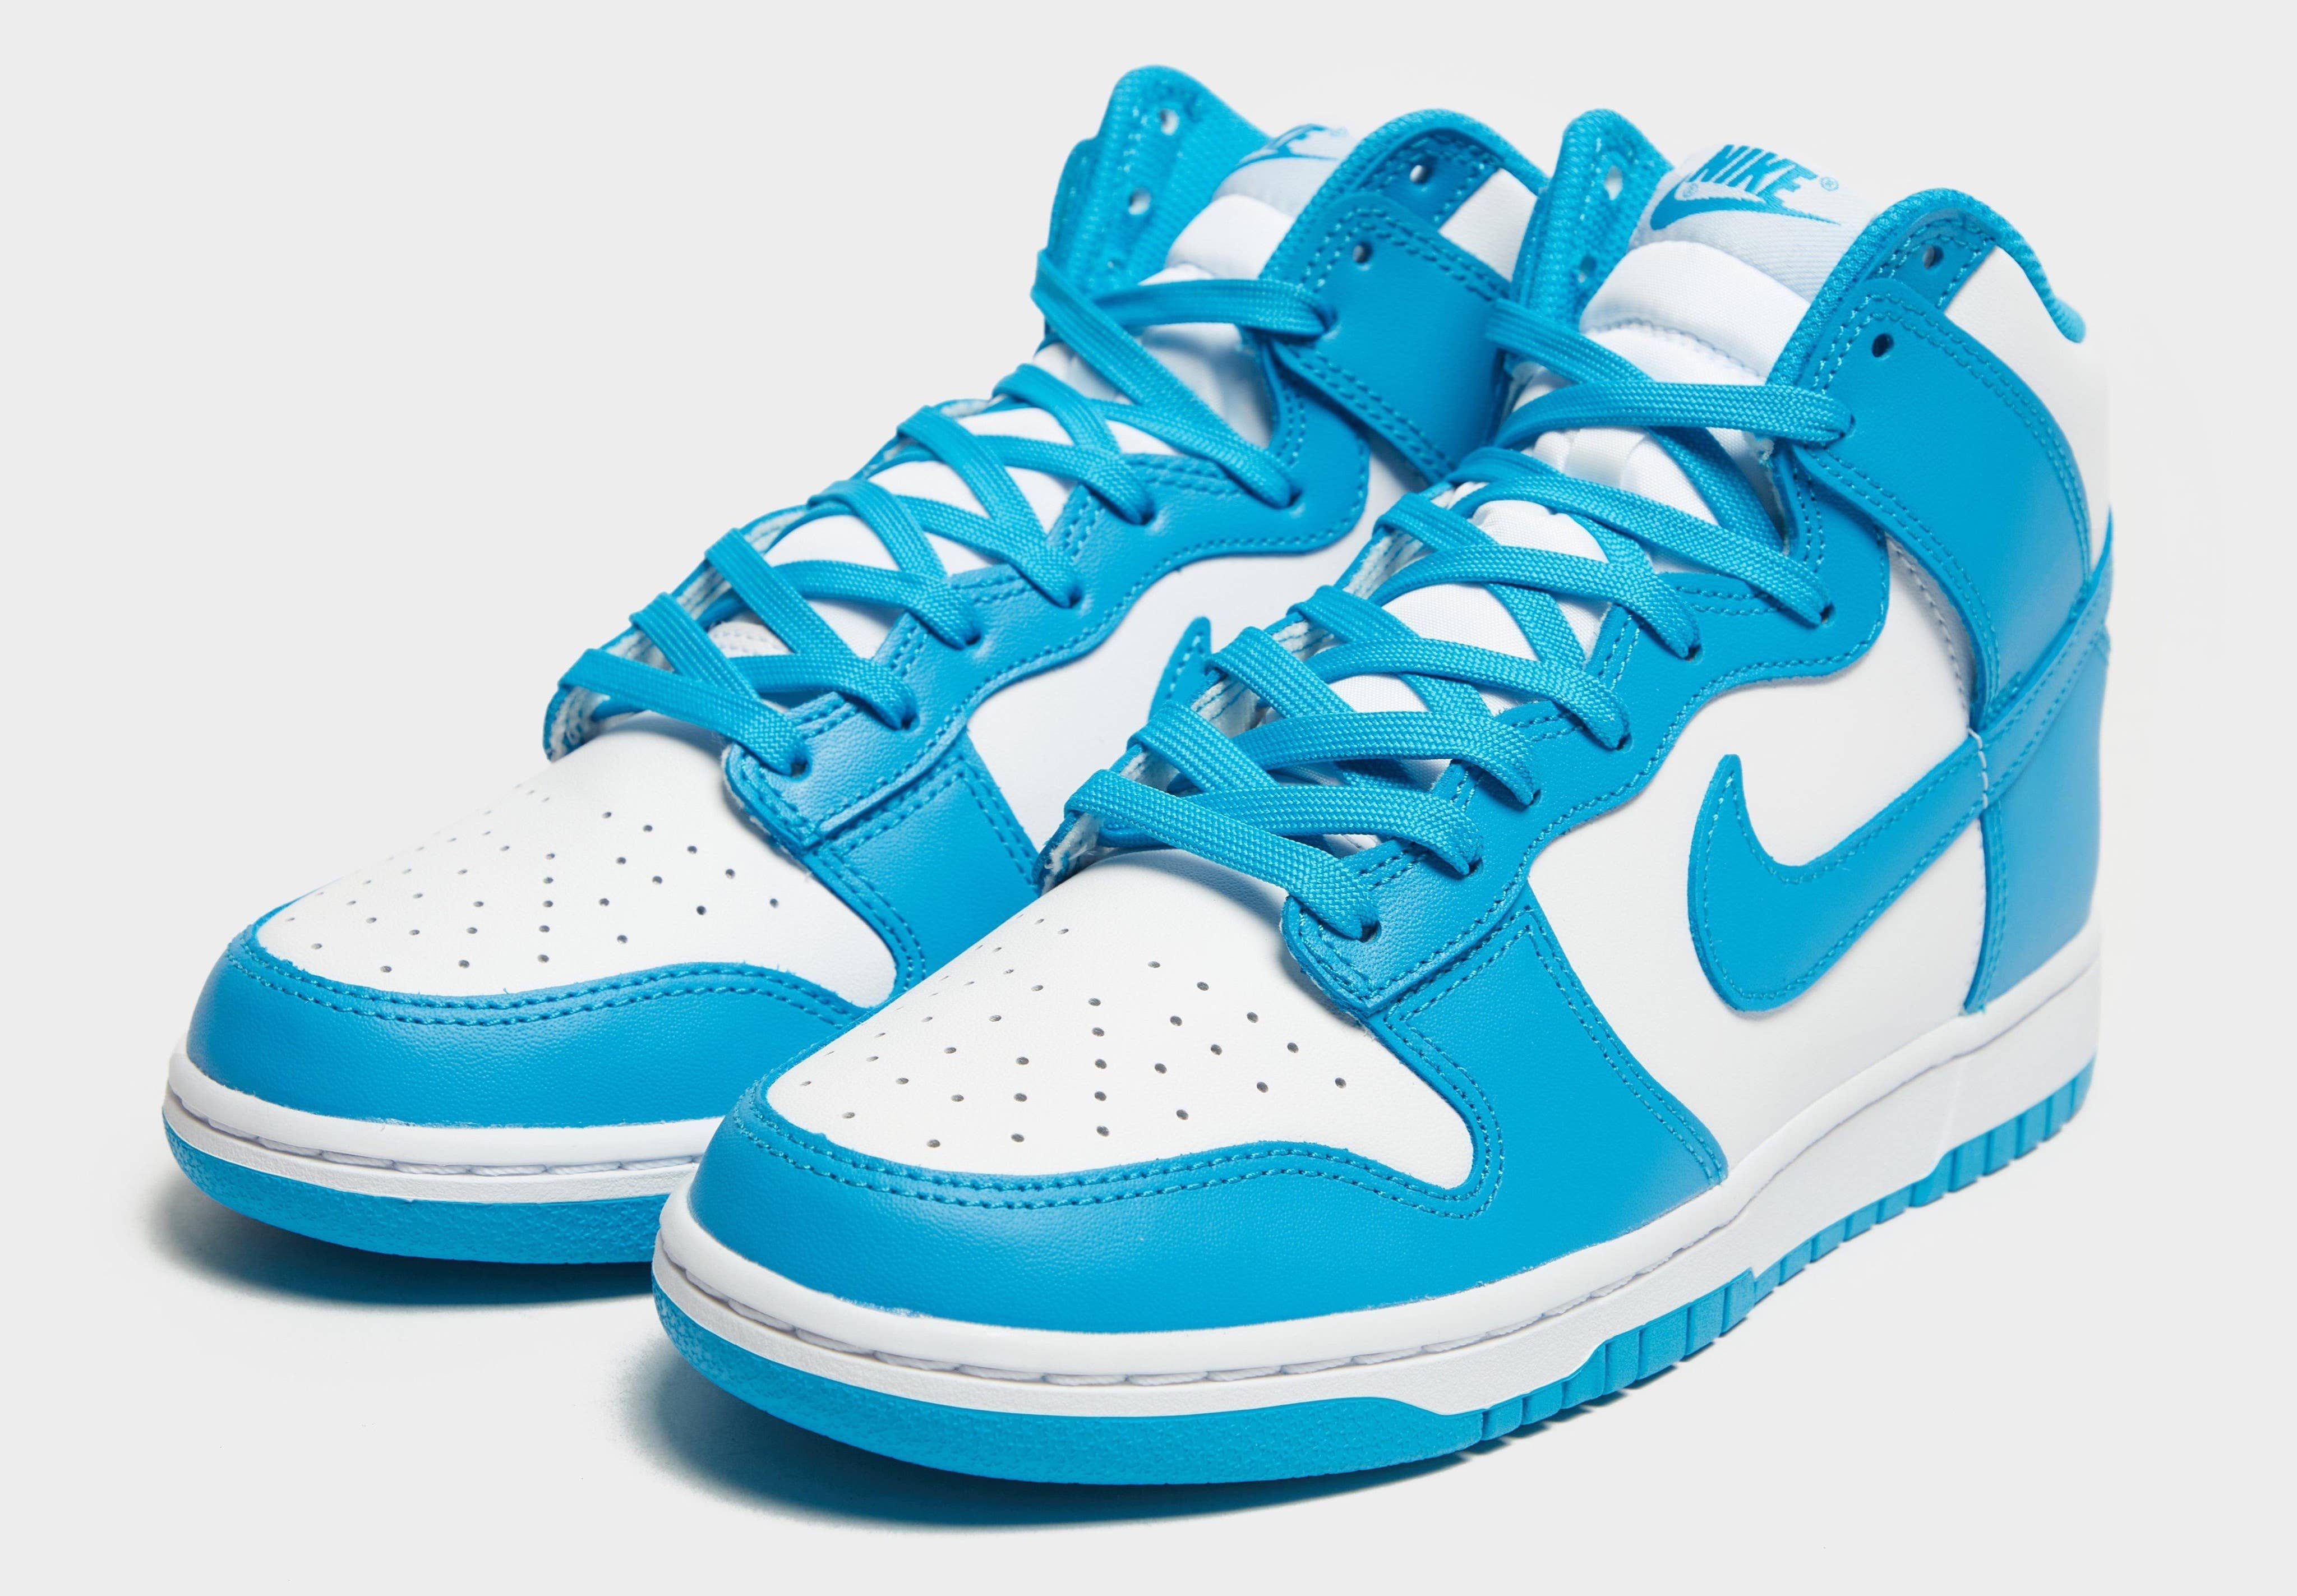 Nike Dunk High 'Laser Blue' Pair